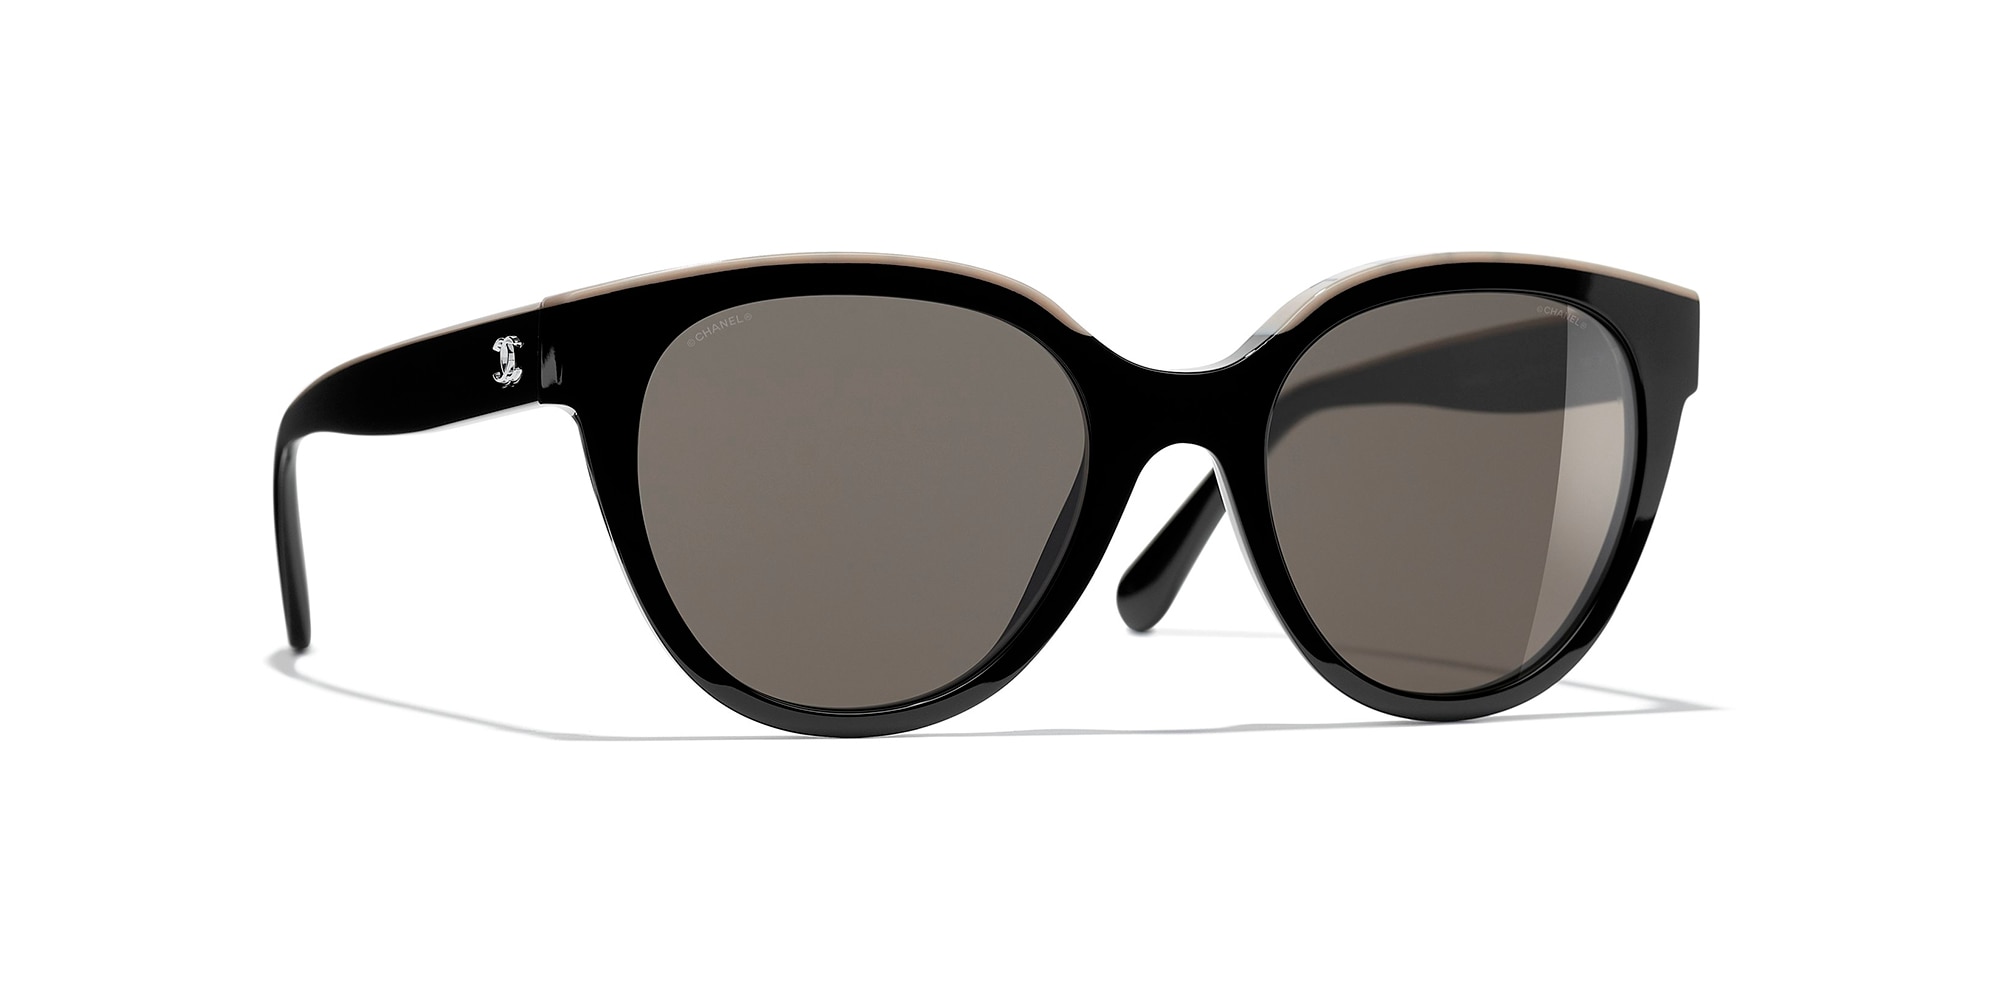 CHANEL Cateye sunglasses in c622t6  blackgold mirrored  Breuninger